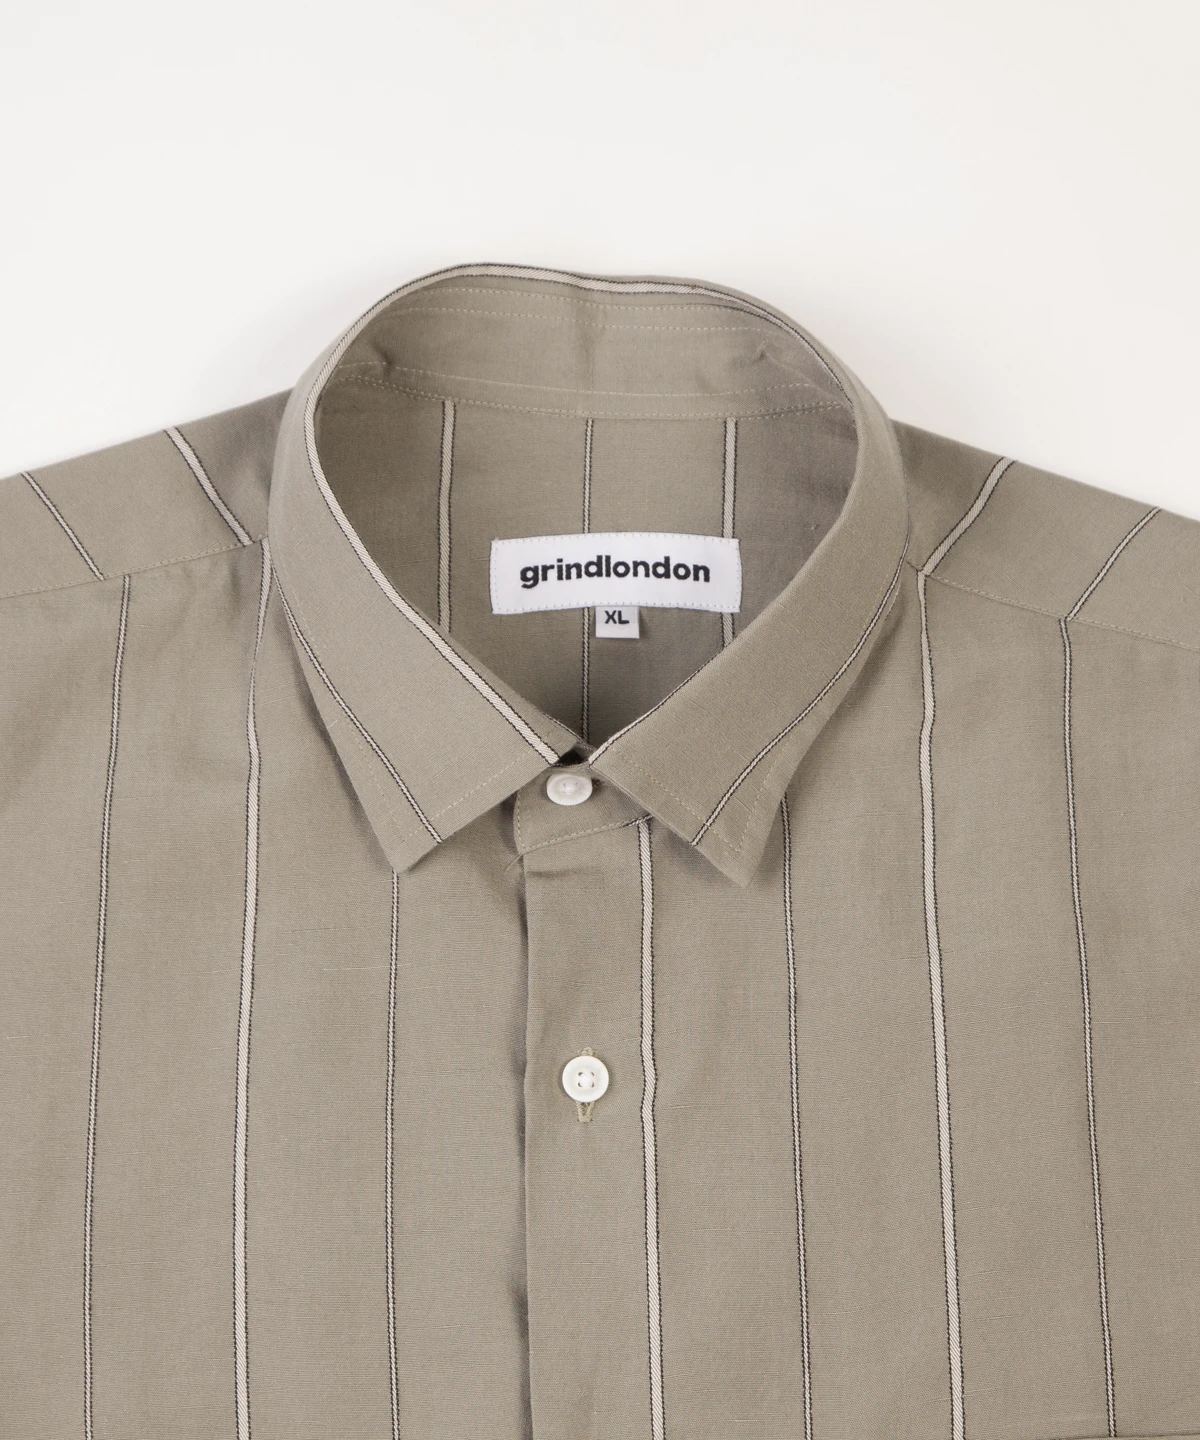 grindlondon viscose linen blend japanese deadstock fabric striped short sleeve shirt olive.